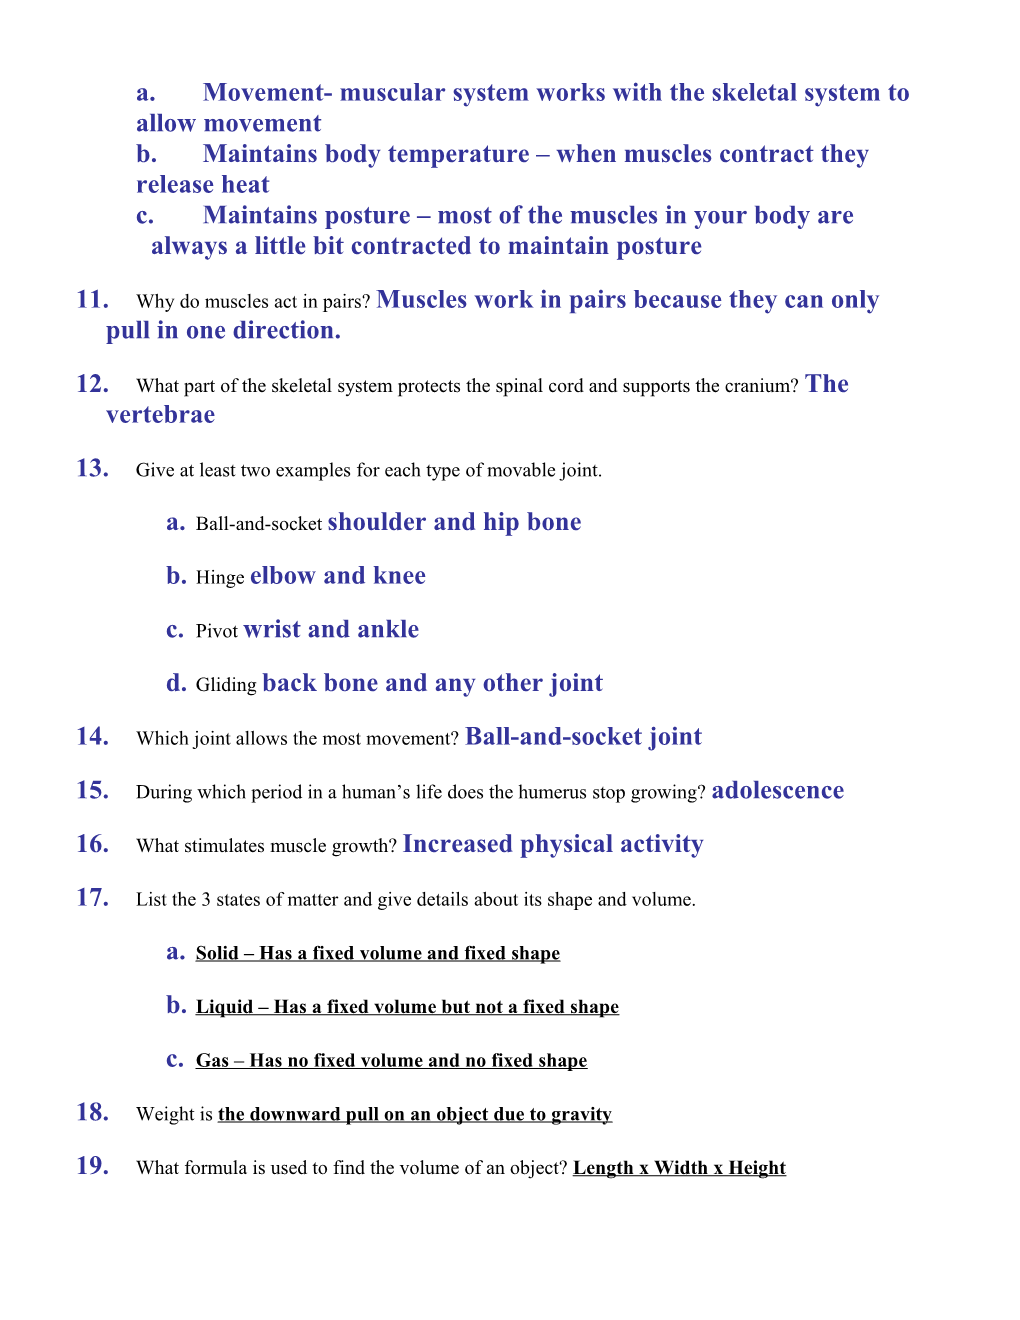 Quarter 2 Benchmark Study Guide ANSWER KEY